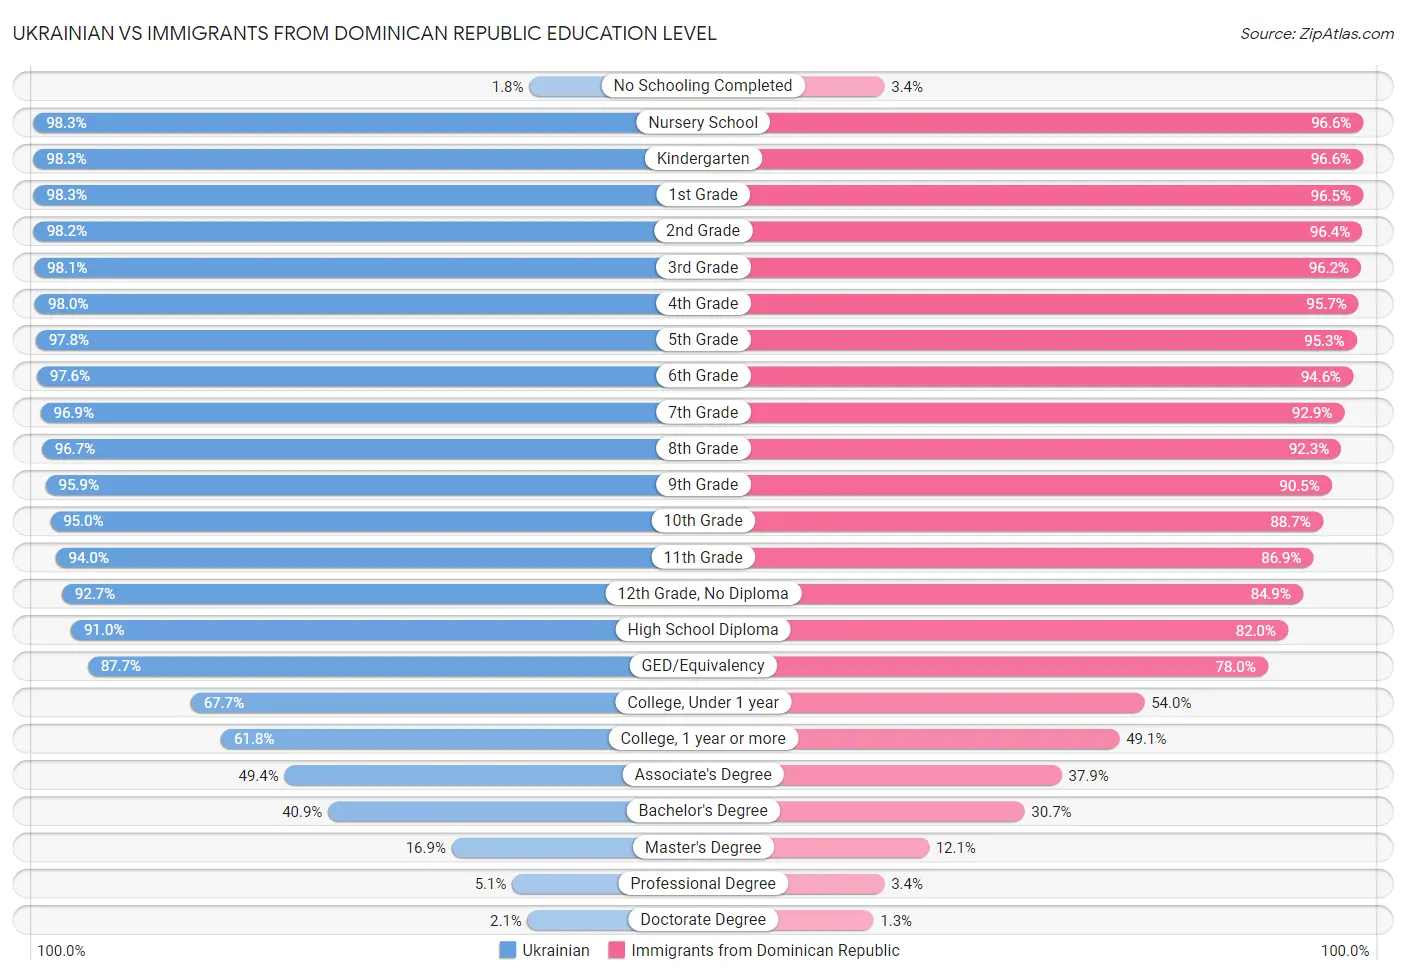 Ukrainian vs Immigrants from Dominican Republic Education Level